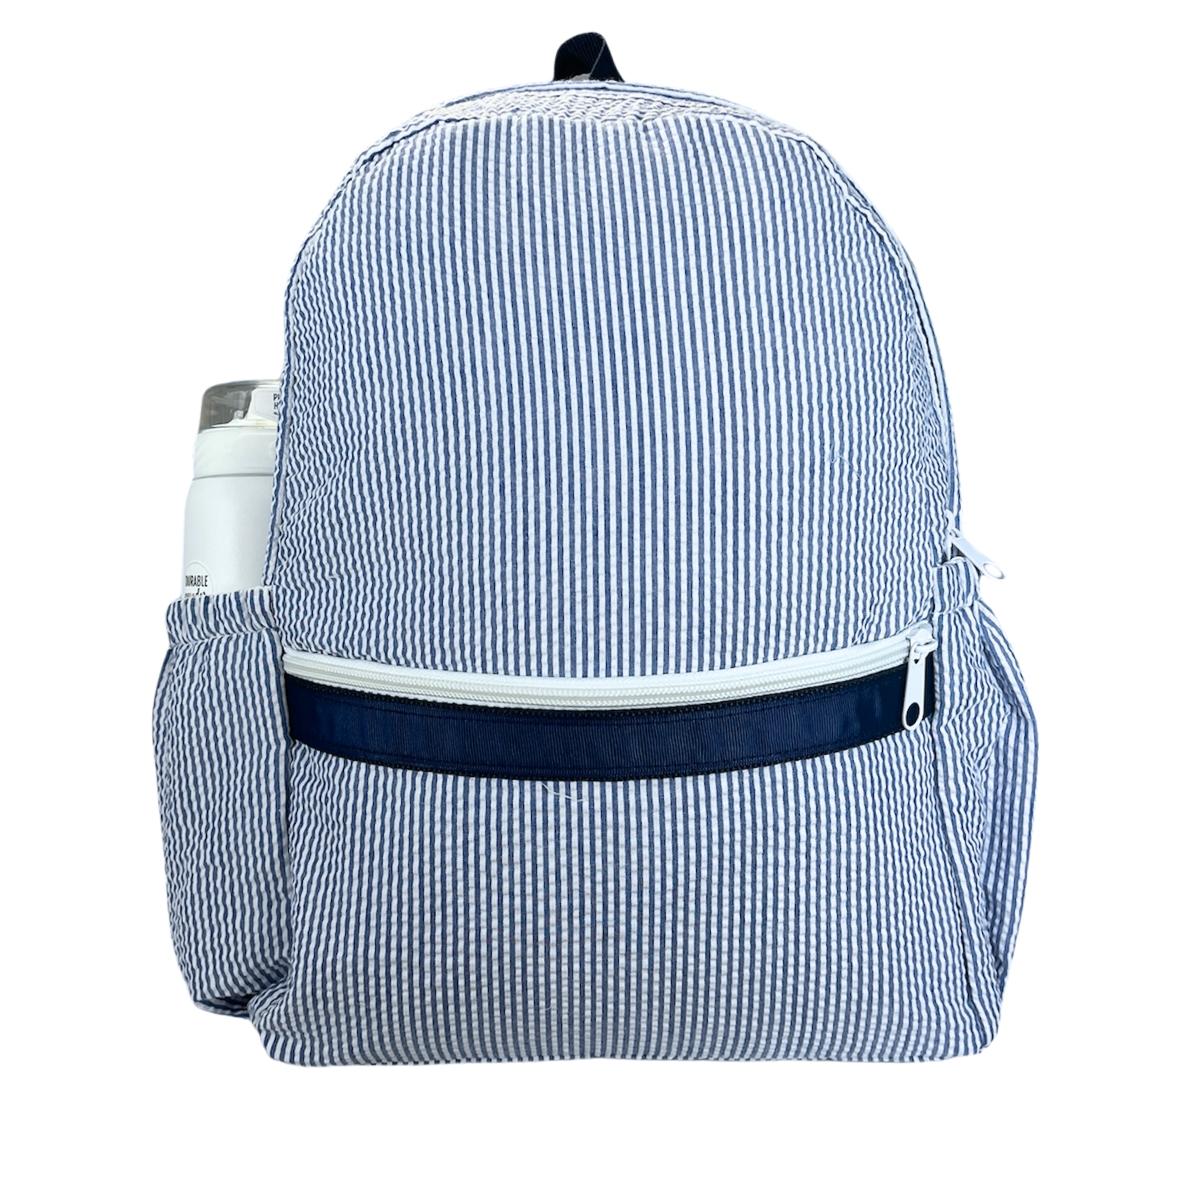 Medium Backpacks with Pockets